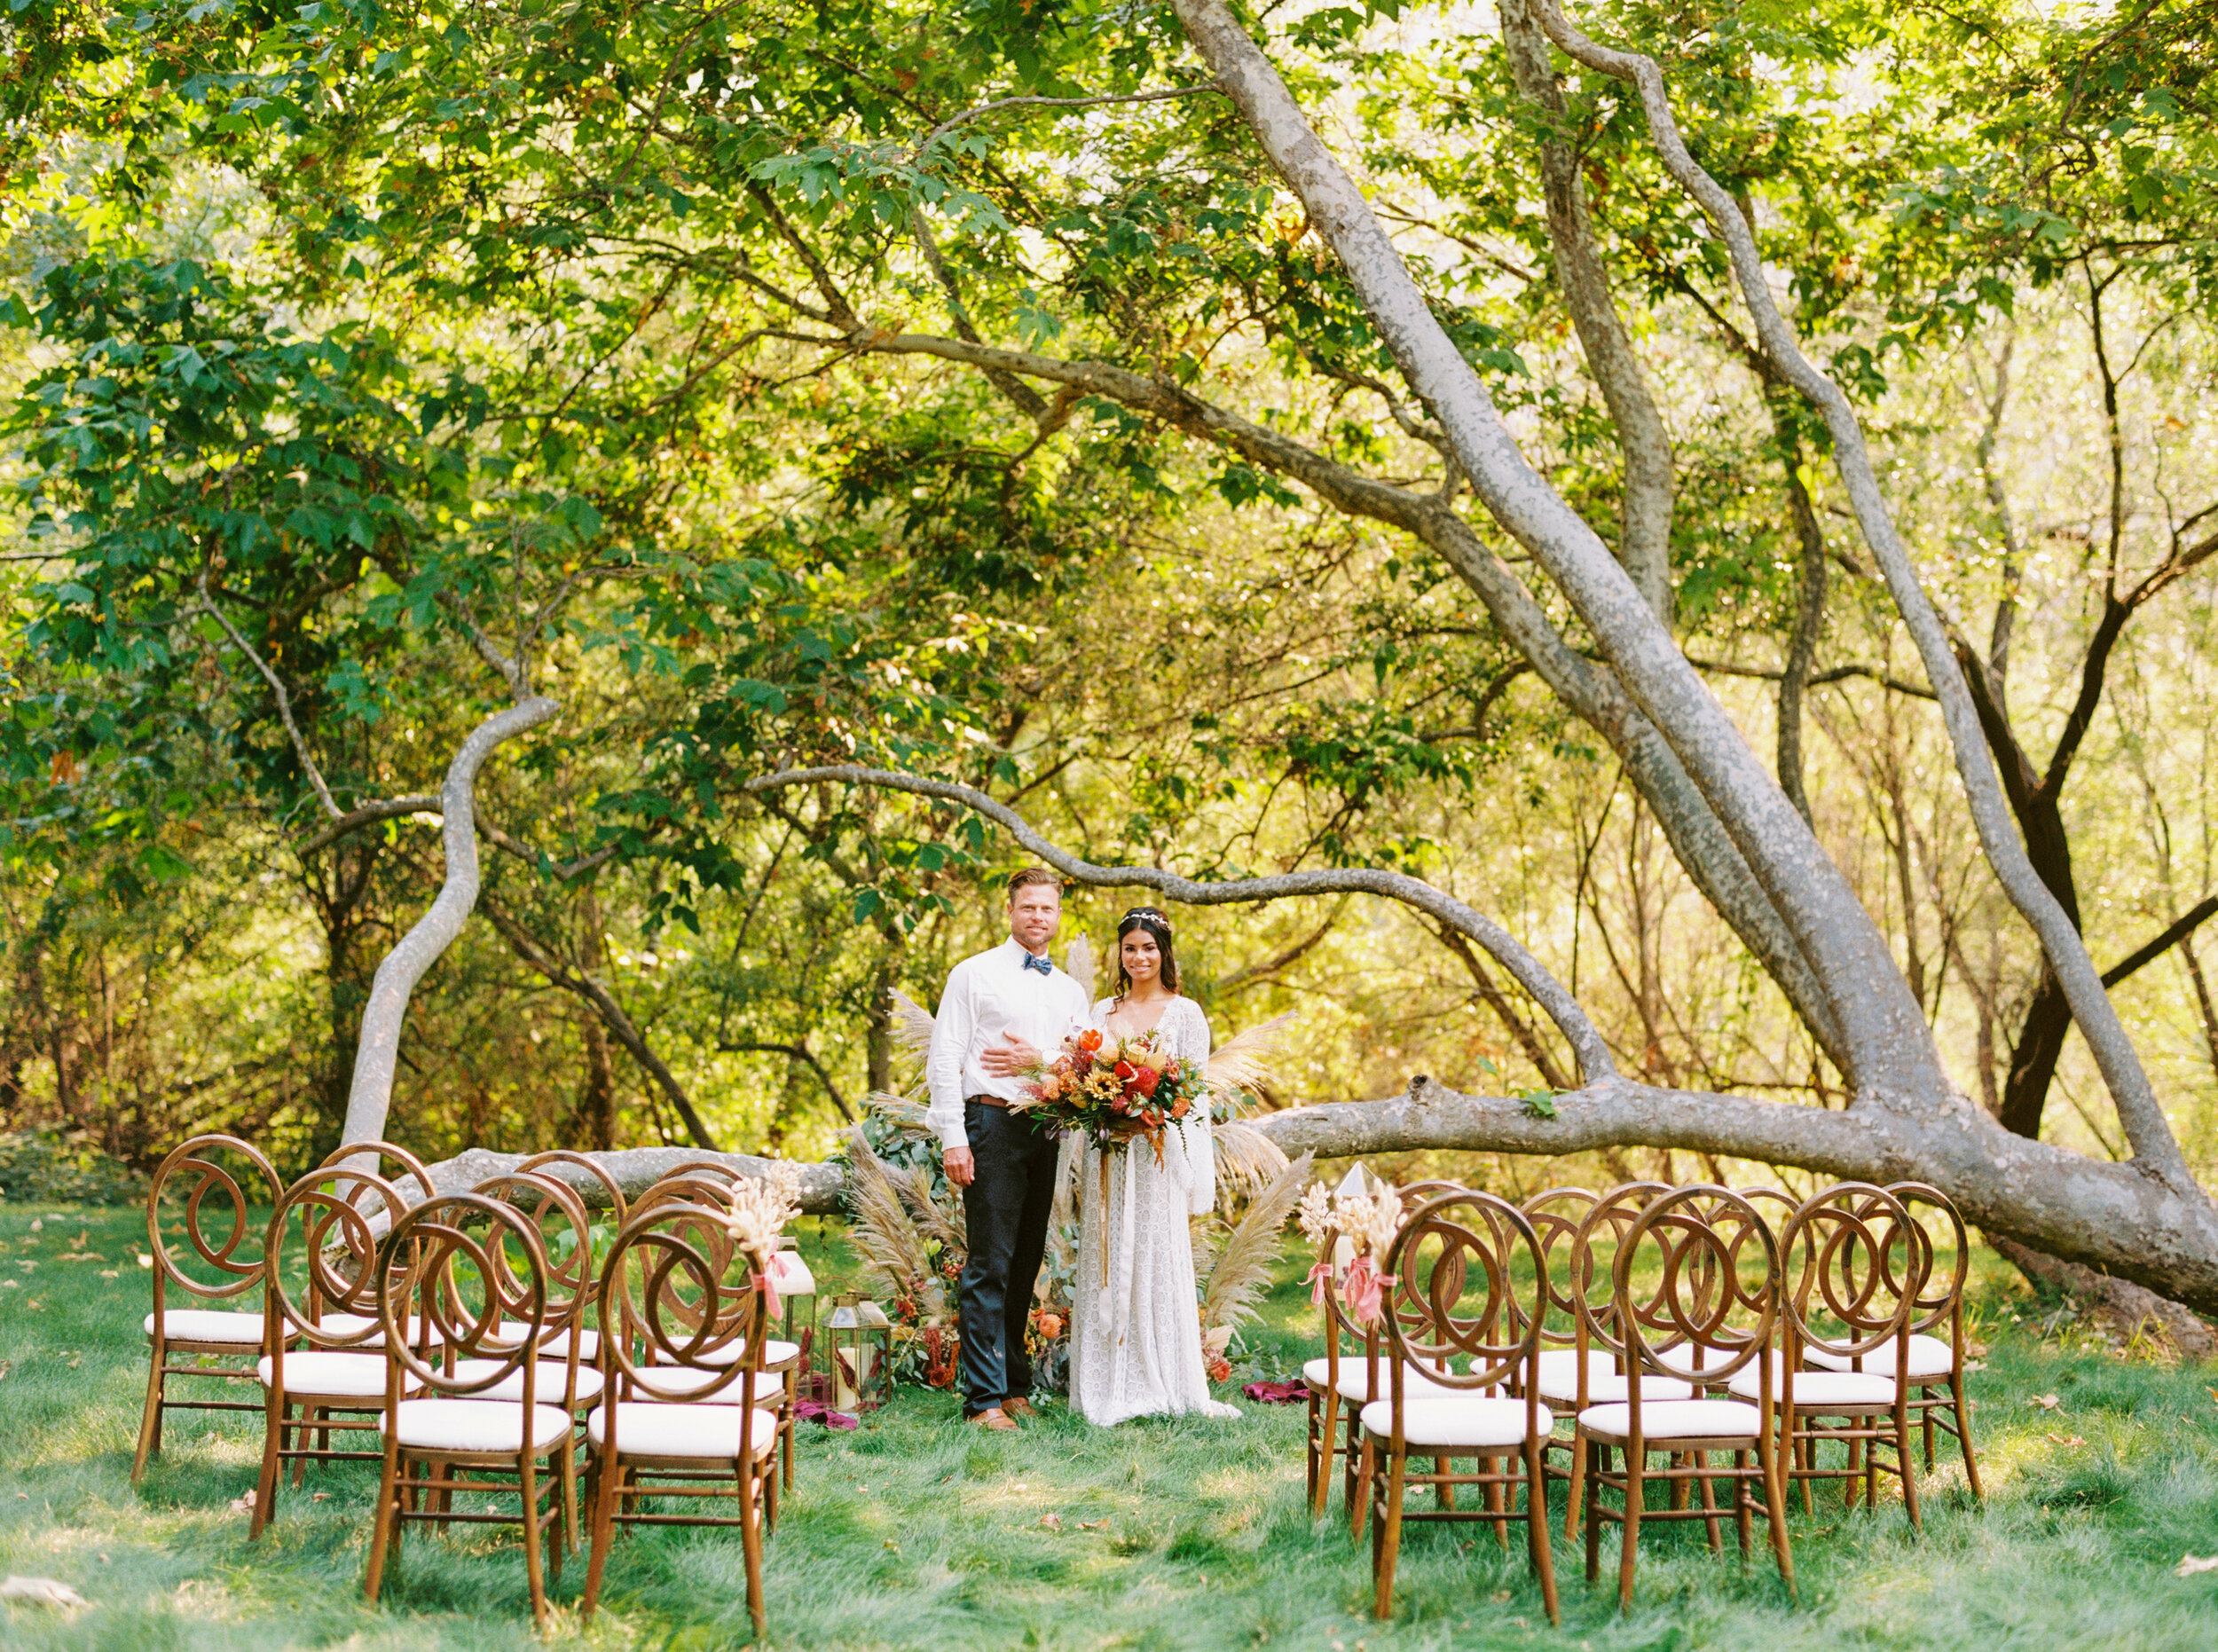 Sarahi Hadden - An Earthy Summer Boho Inspired Wedding with Sunset Hues at Gardener Ranch-19.jpg